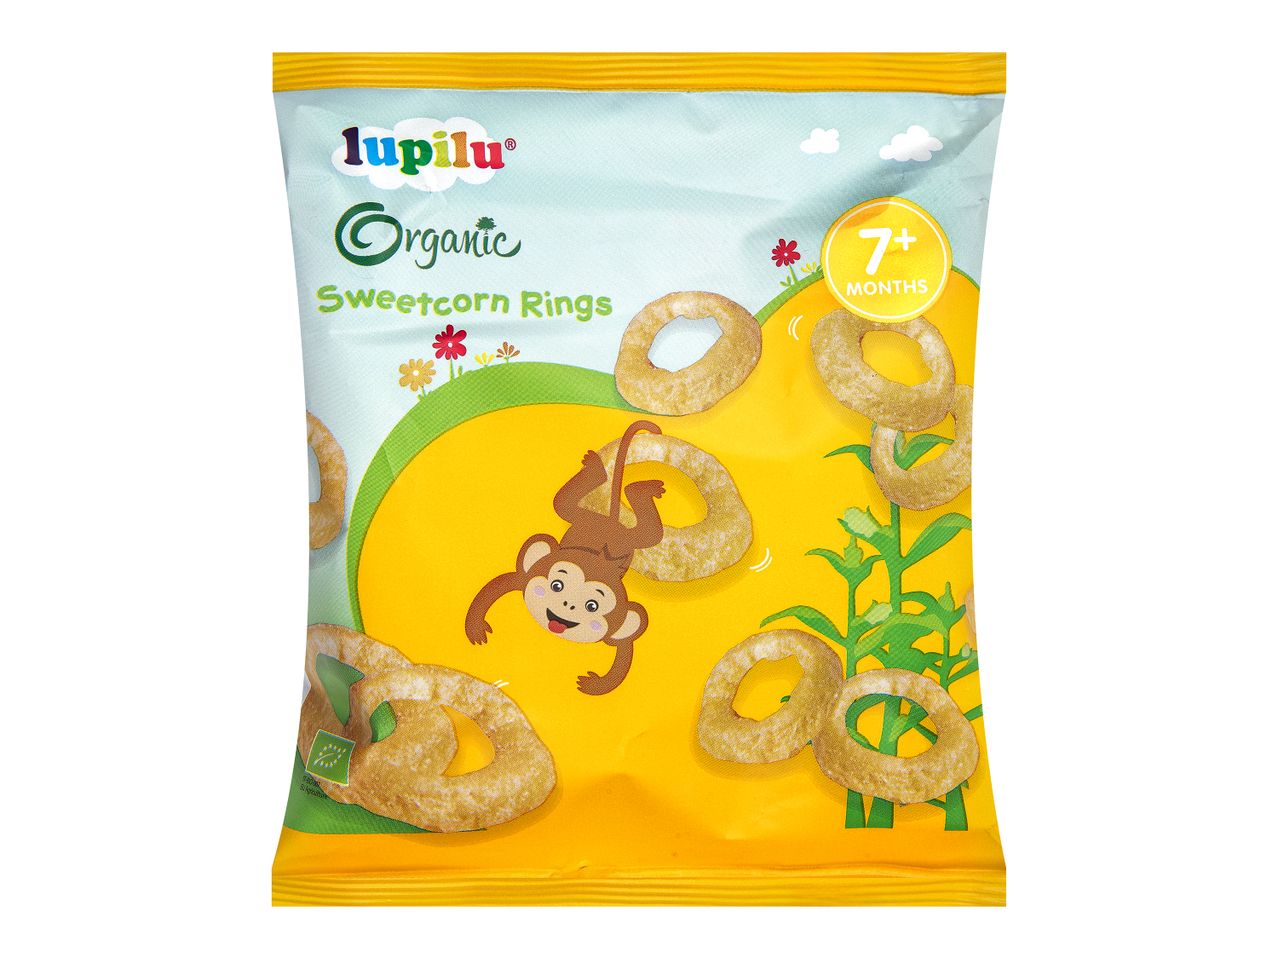 Go to full screen view: Lupilu Organic Sweetcorn Puff Snacks - Image 1